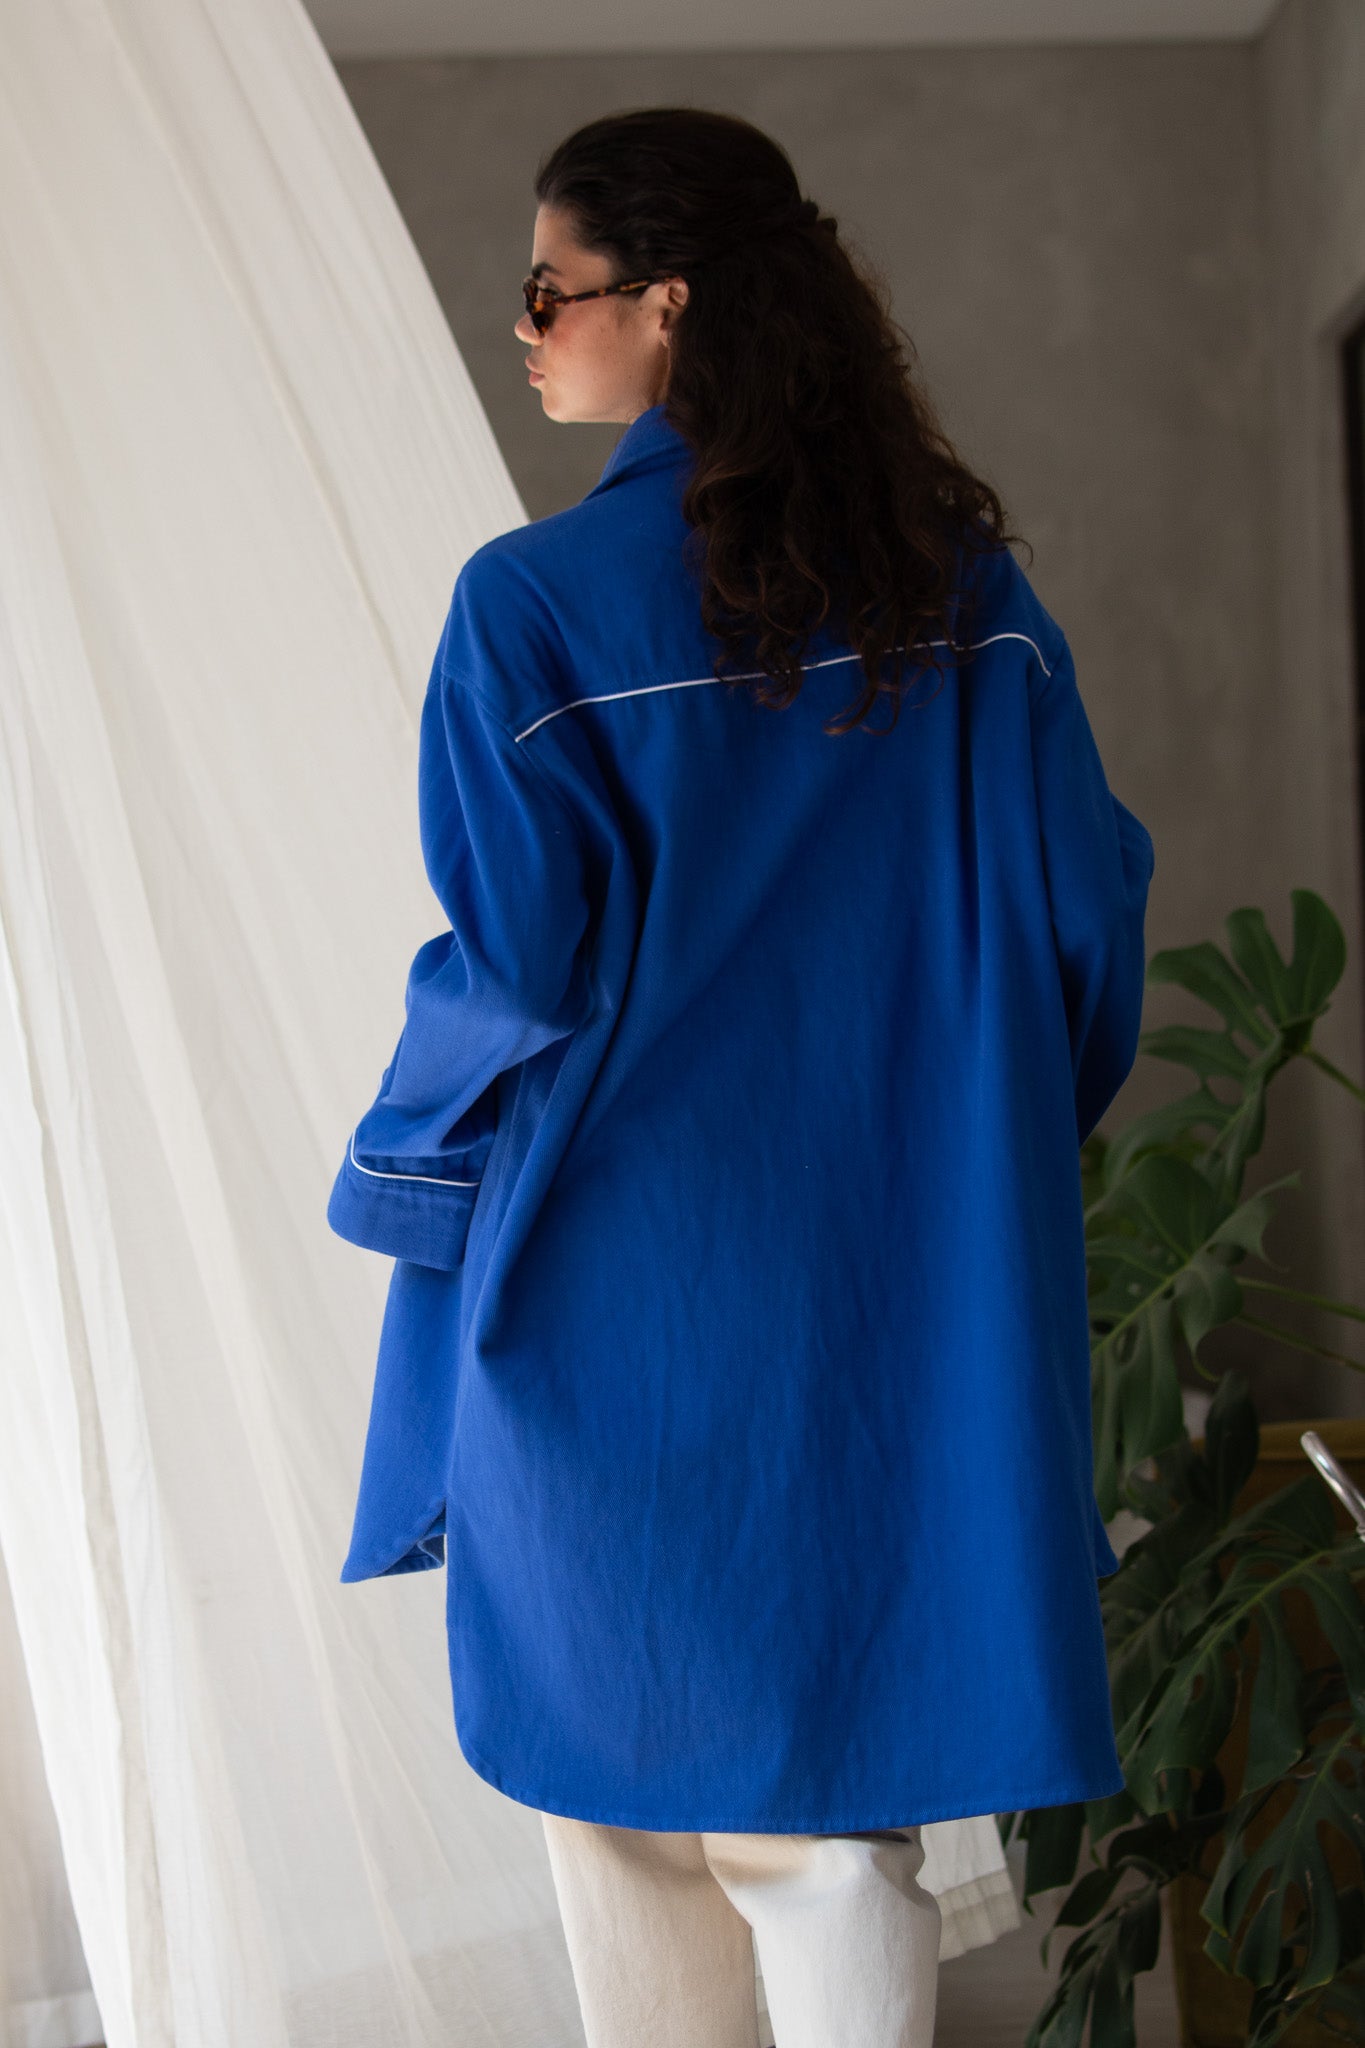 Back walking shot of model wearing denim blue jacket with binding 